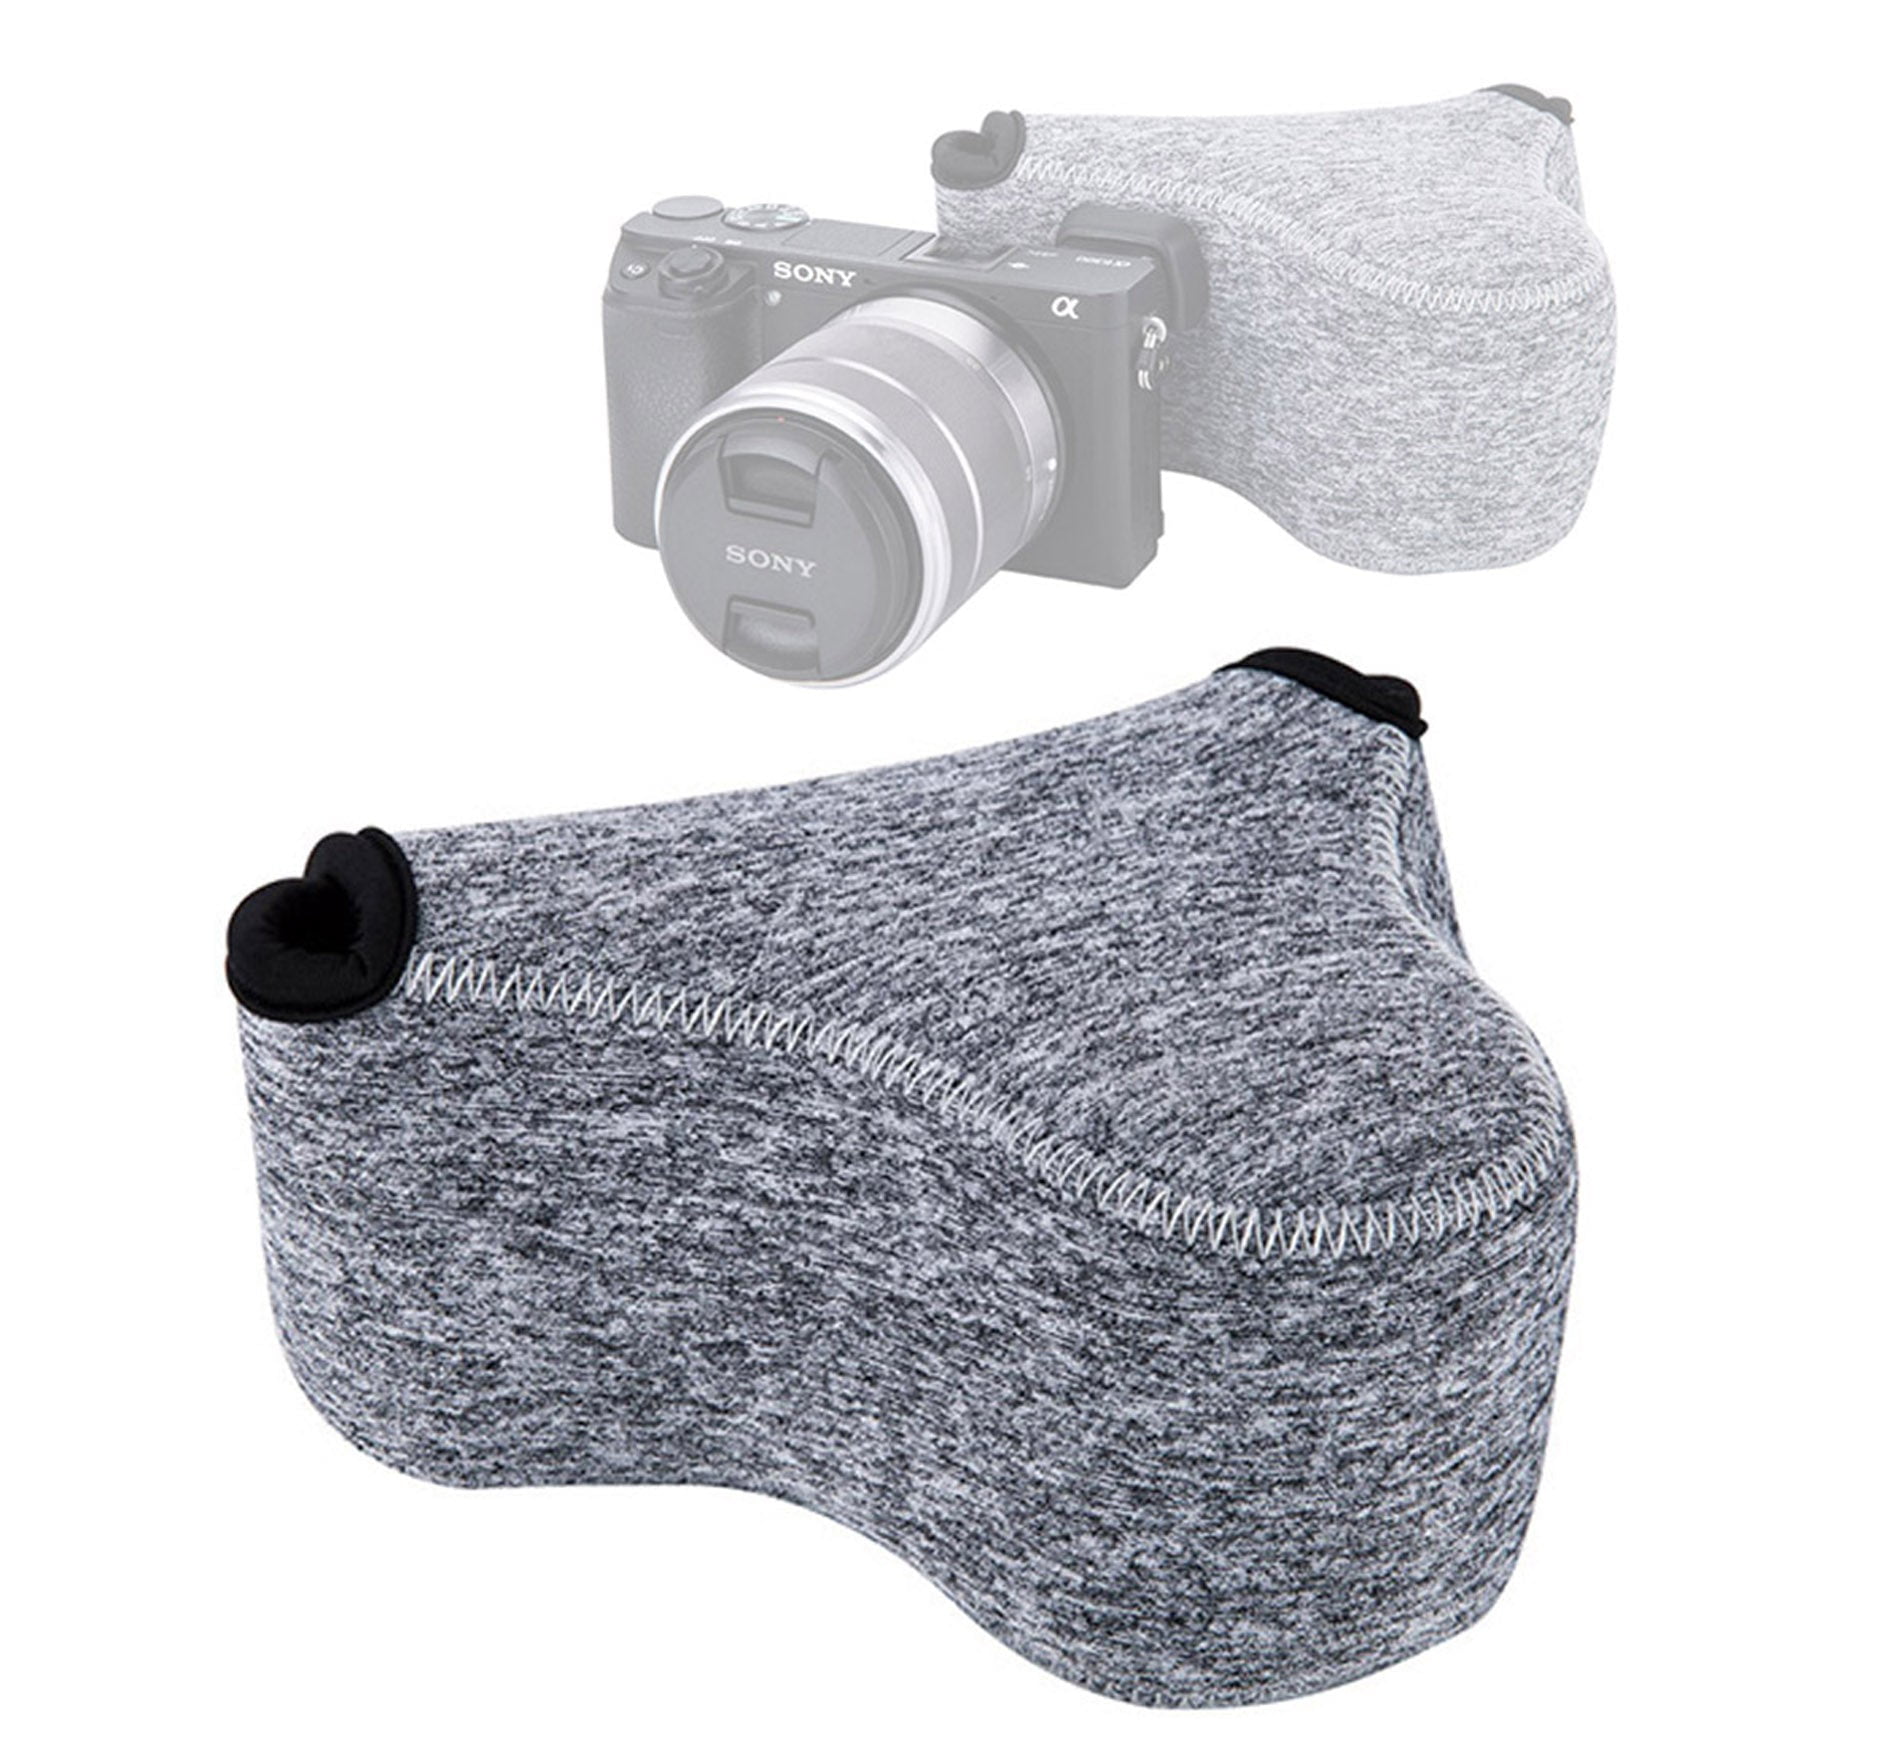 JJC OC-S2BK Neoprene Mirrorless Camera Pouch Case Bag for Sony Canon Nikon etc. 